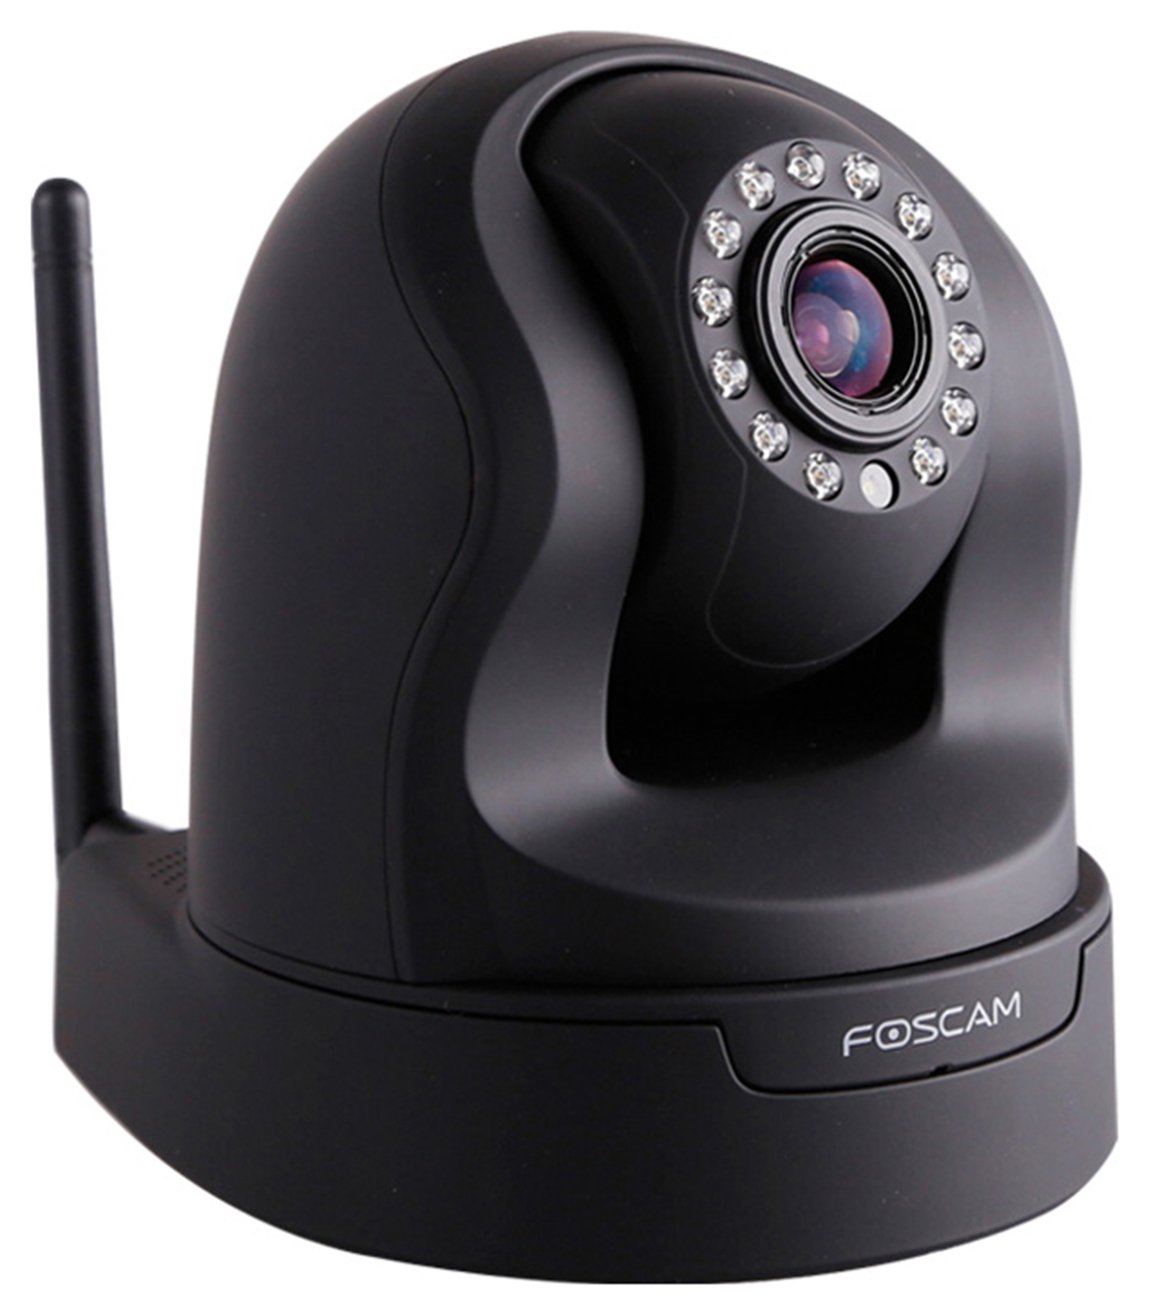 Foscam FI9826P 960P HD PTZ Wireless CCTV IP Camera - Black